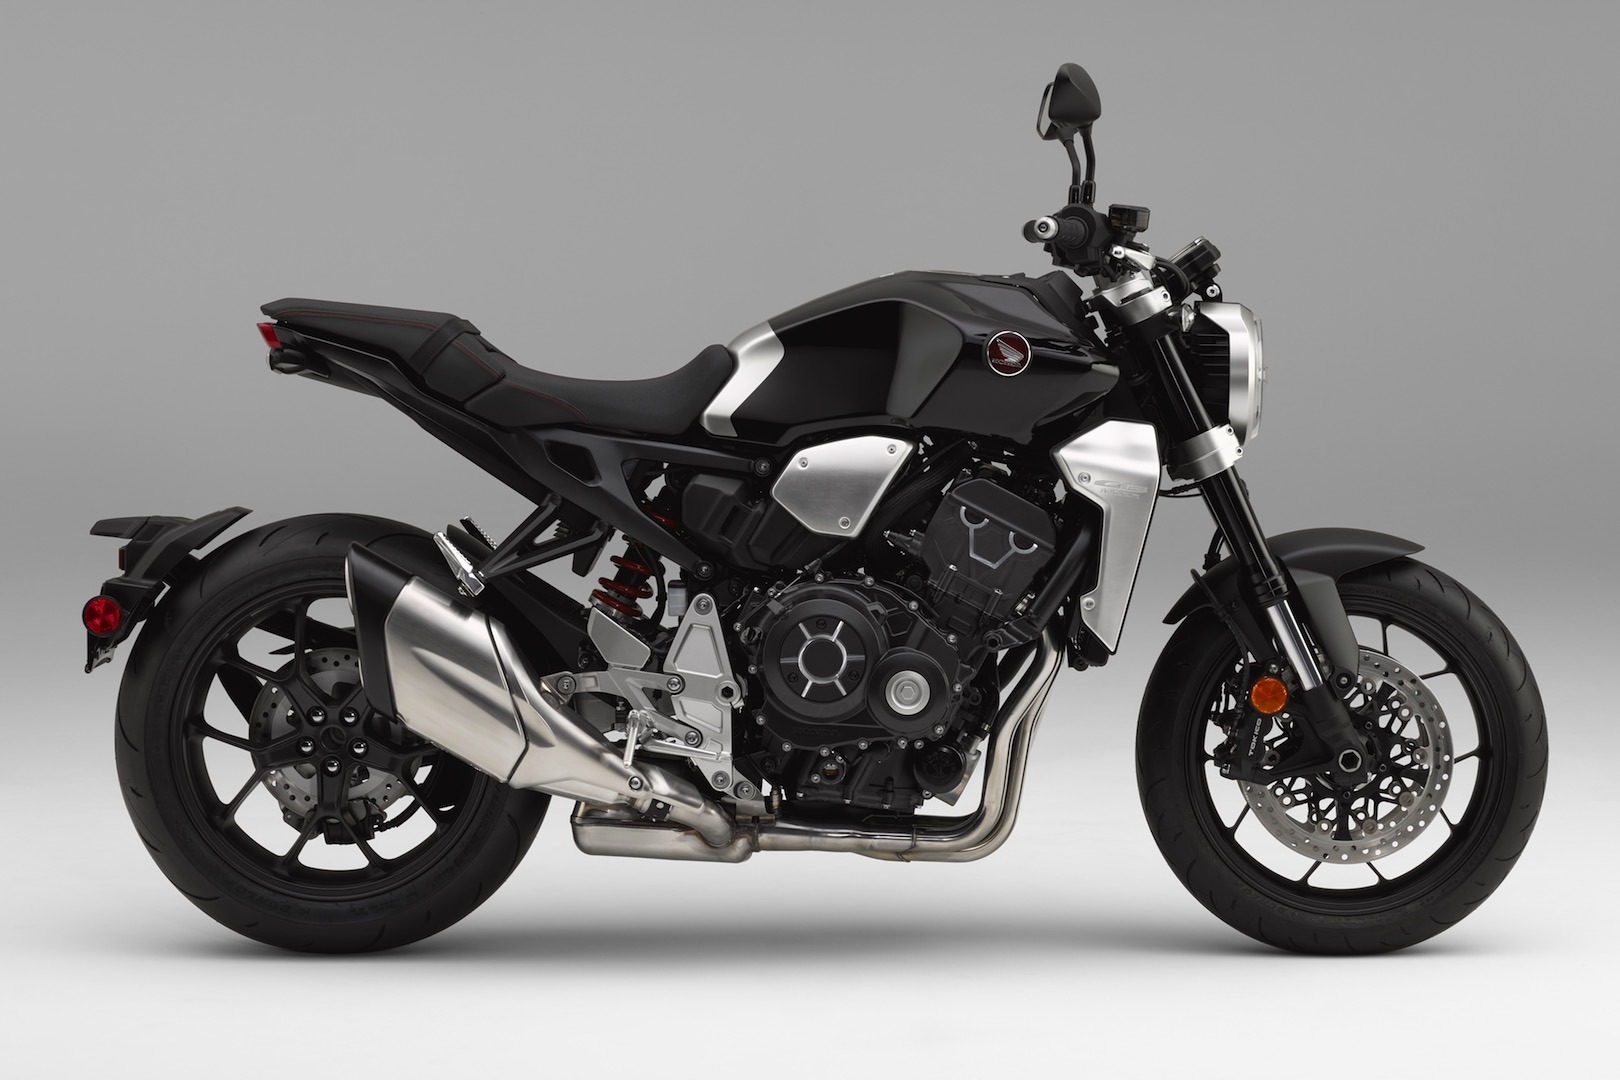 2018-Honda-CB1000R-First-Look-naked-sport-motorcycle-11.jpg